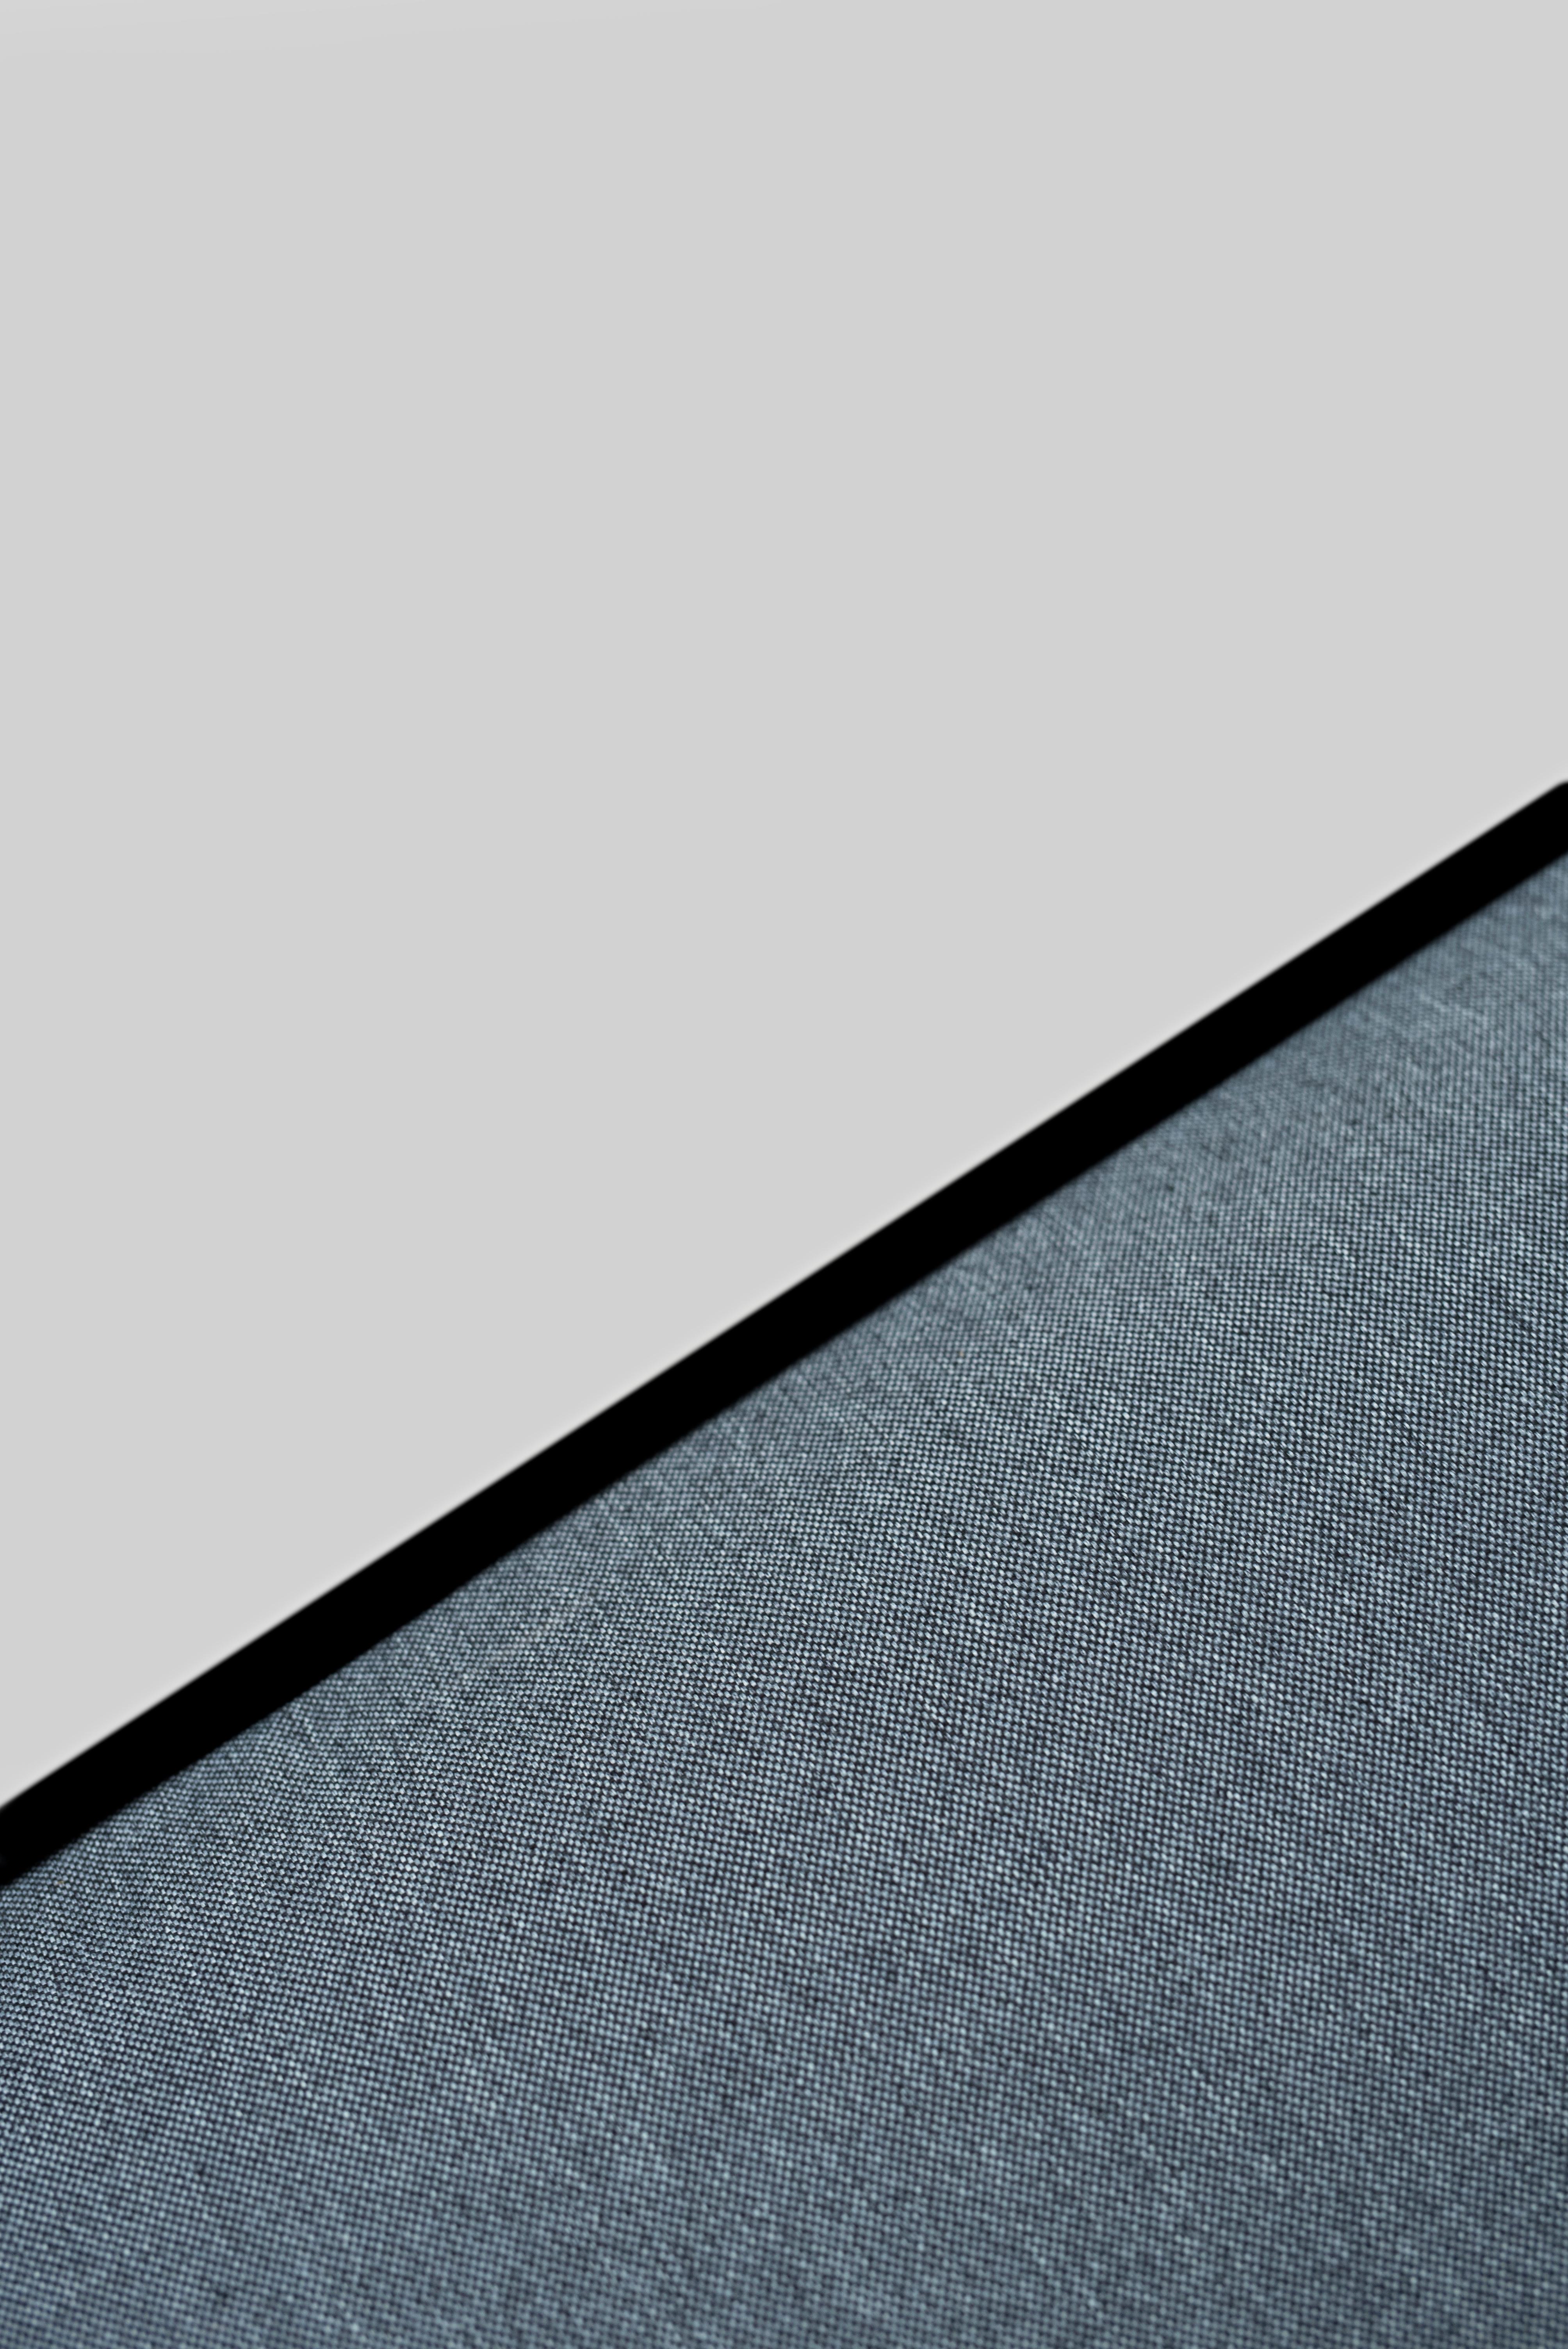 Minimalist GHYCZY Armchair Brad GP01 Frame Charcoal, Ristretto, Black Details For Sale